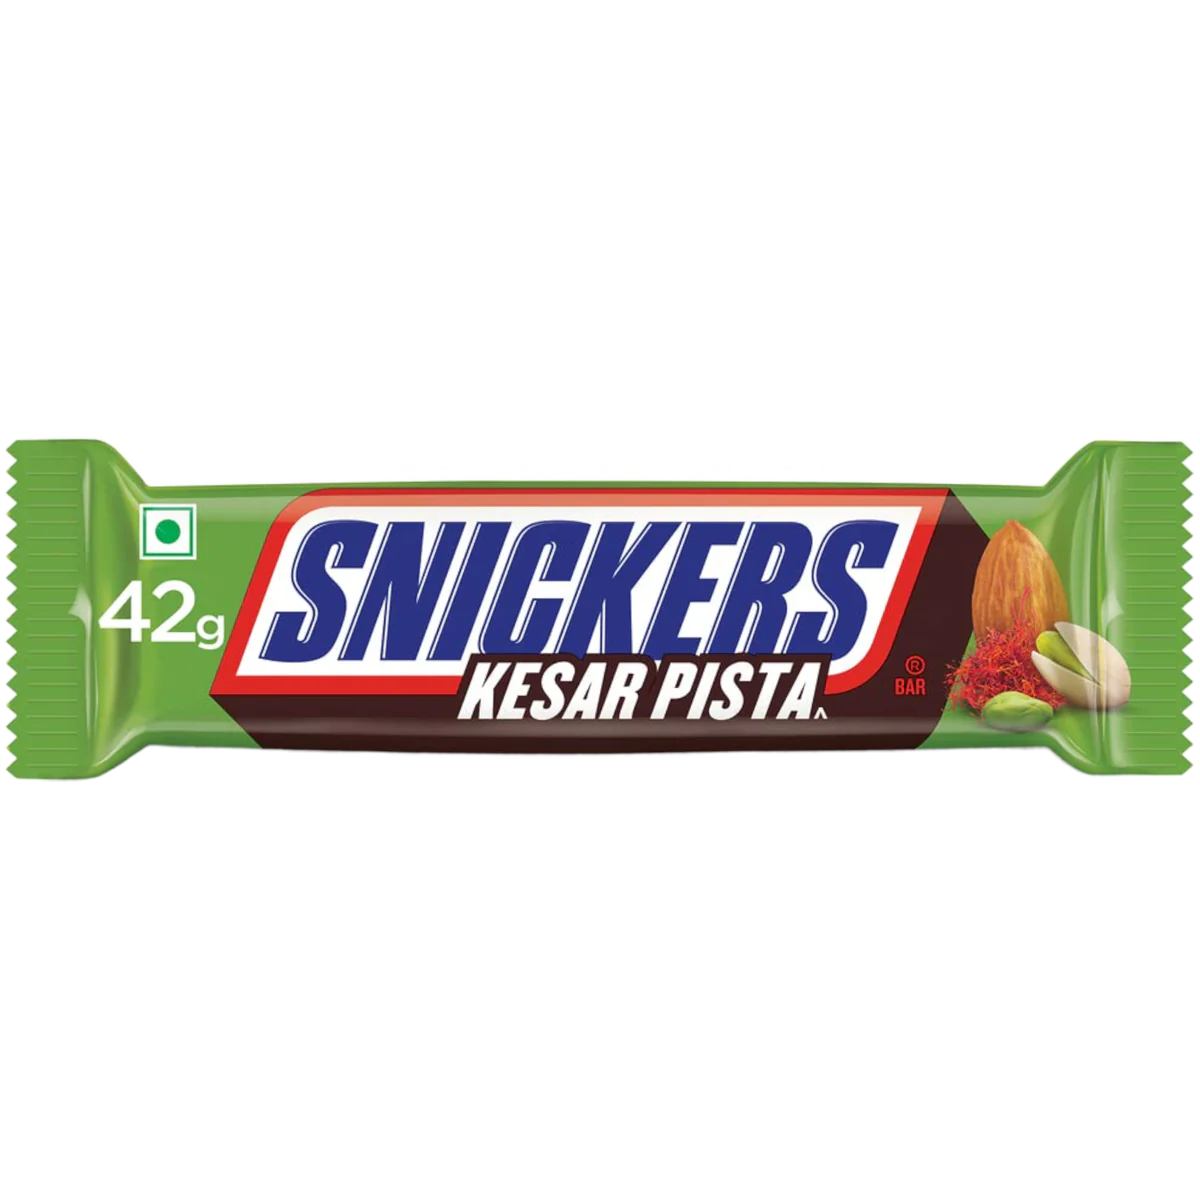 Snickers Pistachio Kesar Pista 22g (India)